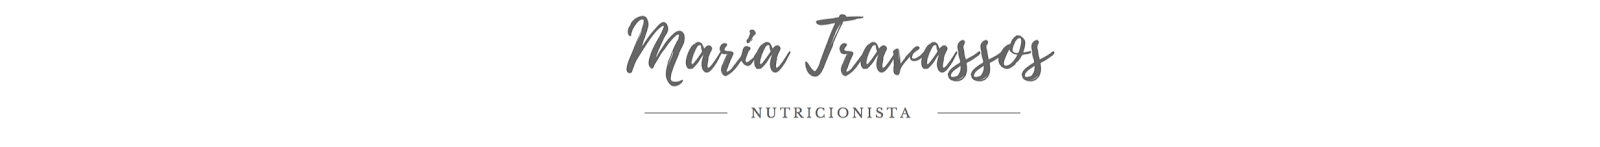 Maria Travassos - Nutricionista